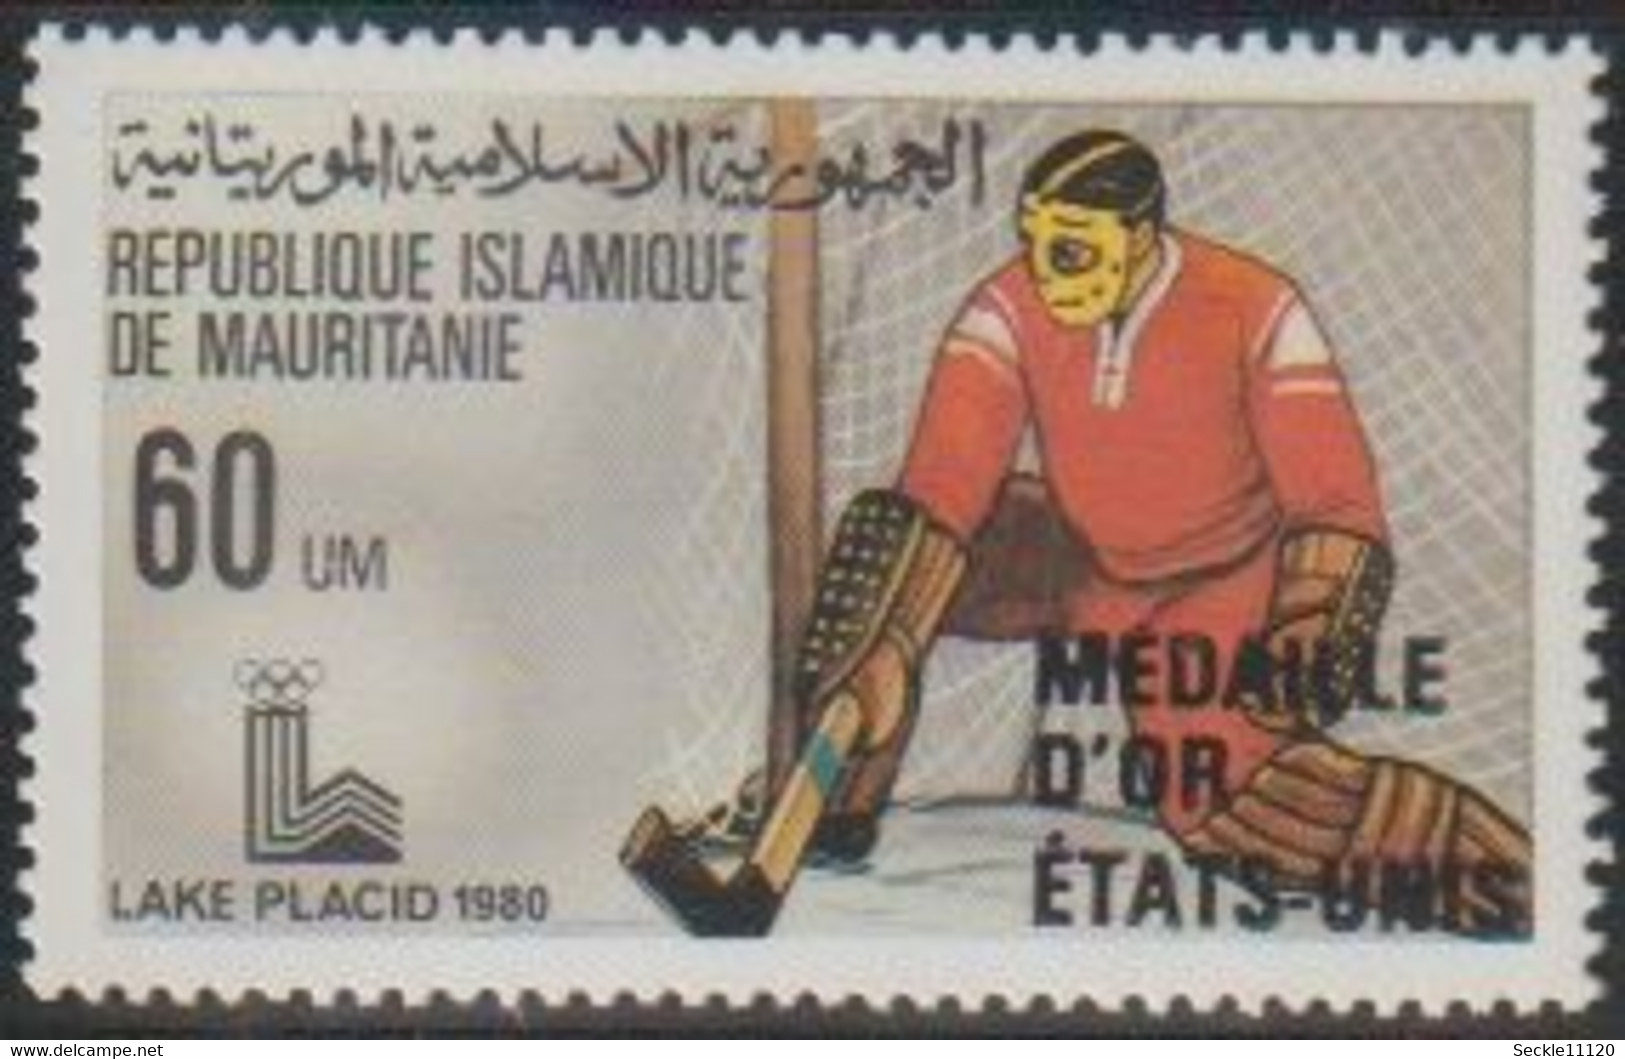 Mauritanie Mauritania - 1979 - 439 / 444 - JO De Lacke Placid - Oblitéré - Mauritanie (1960-...)